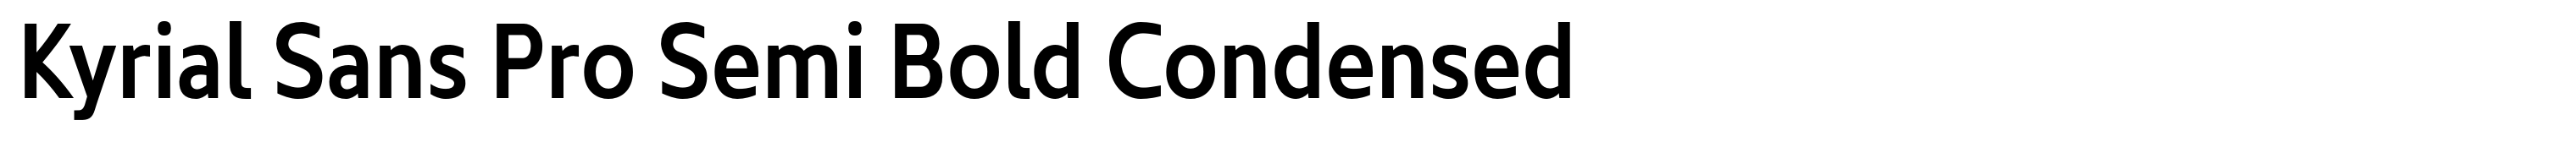 Kyrial Sans Pro Semi Bold Condensed